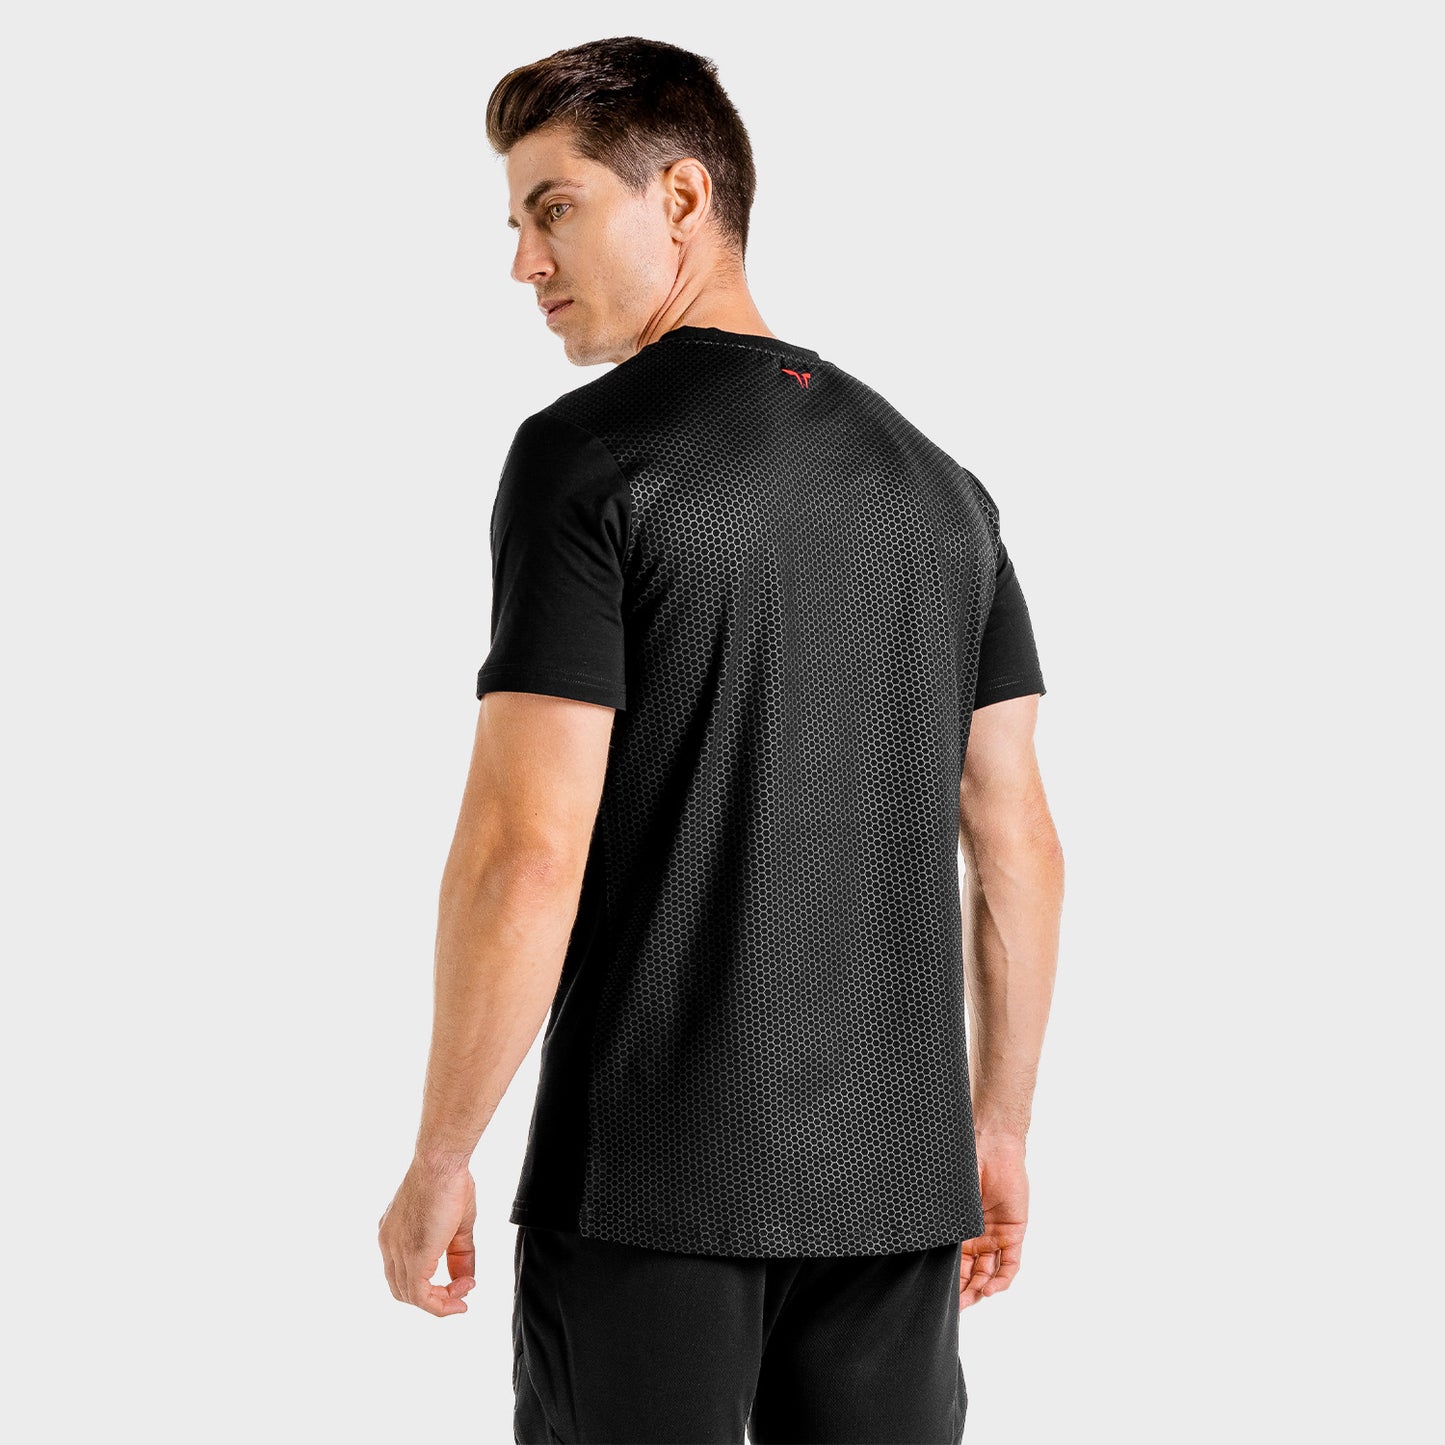 squatwolf-workout-shirts-for-men-superman-gym-tee-black-gym-wear